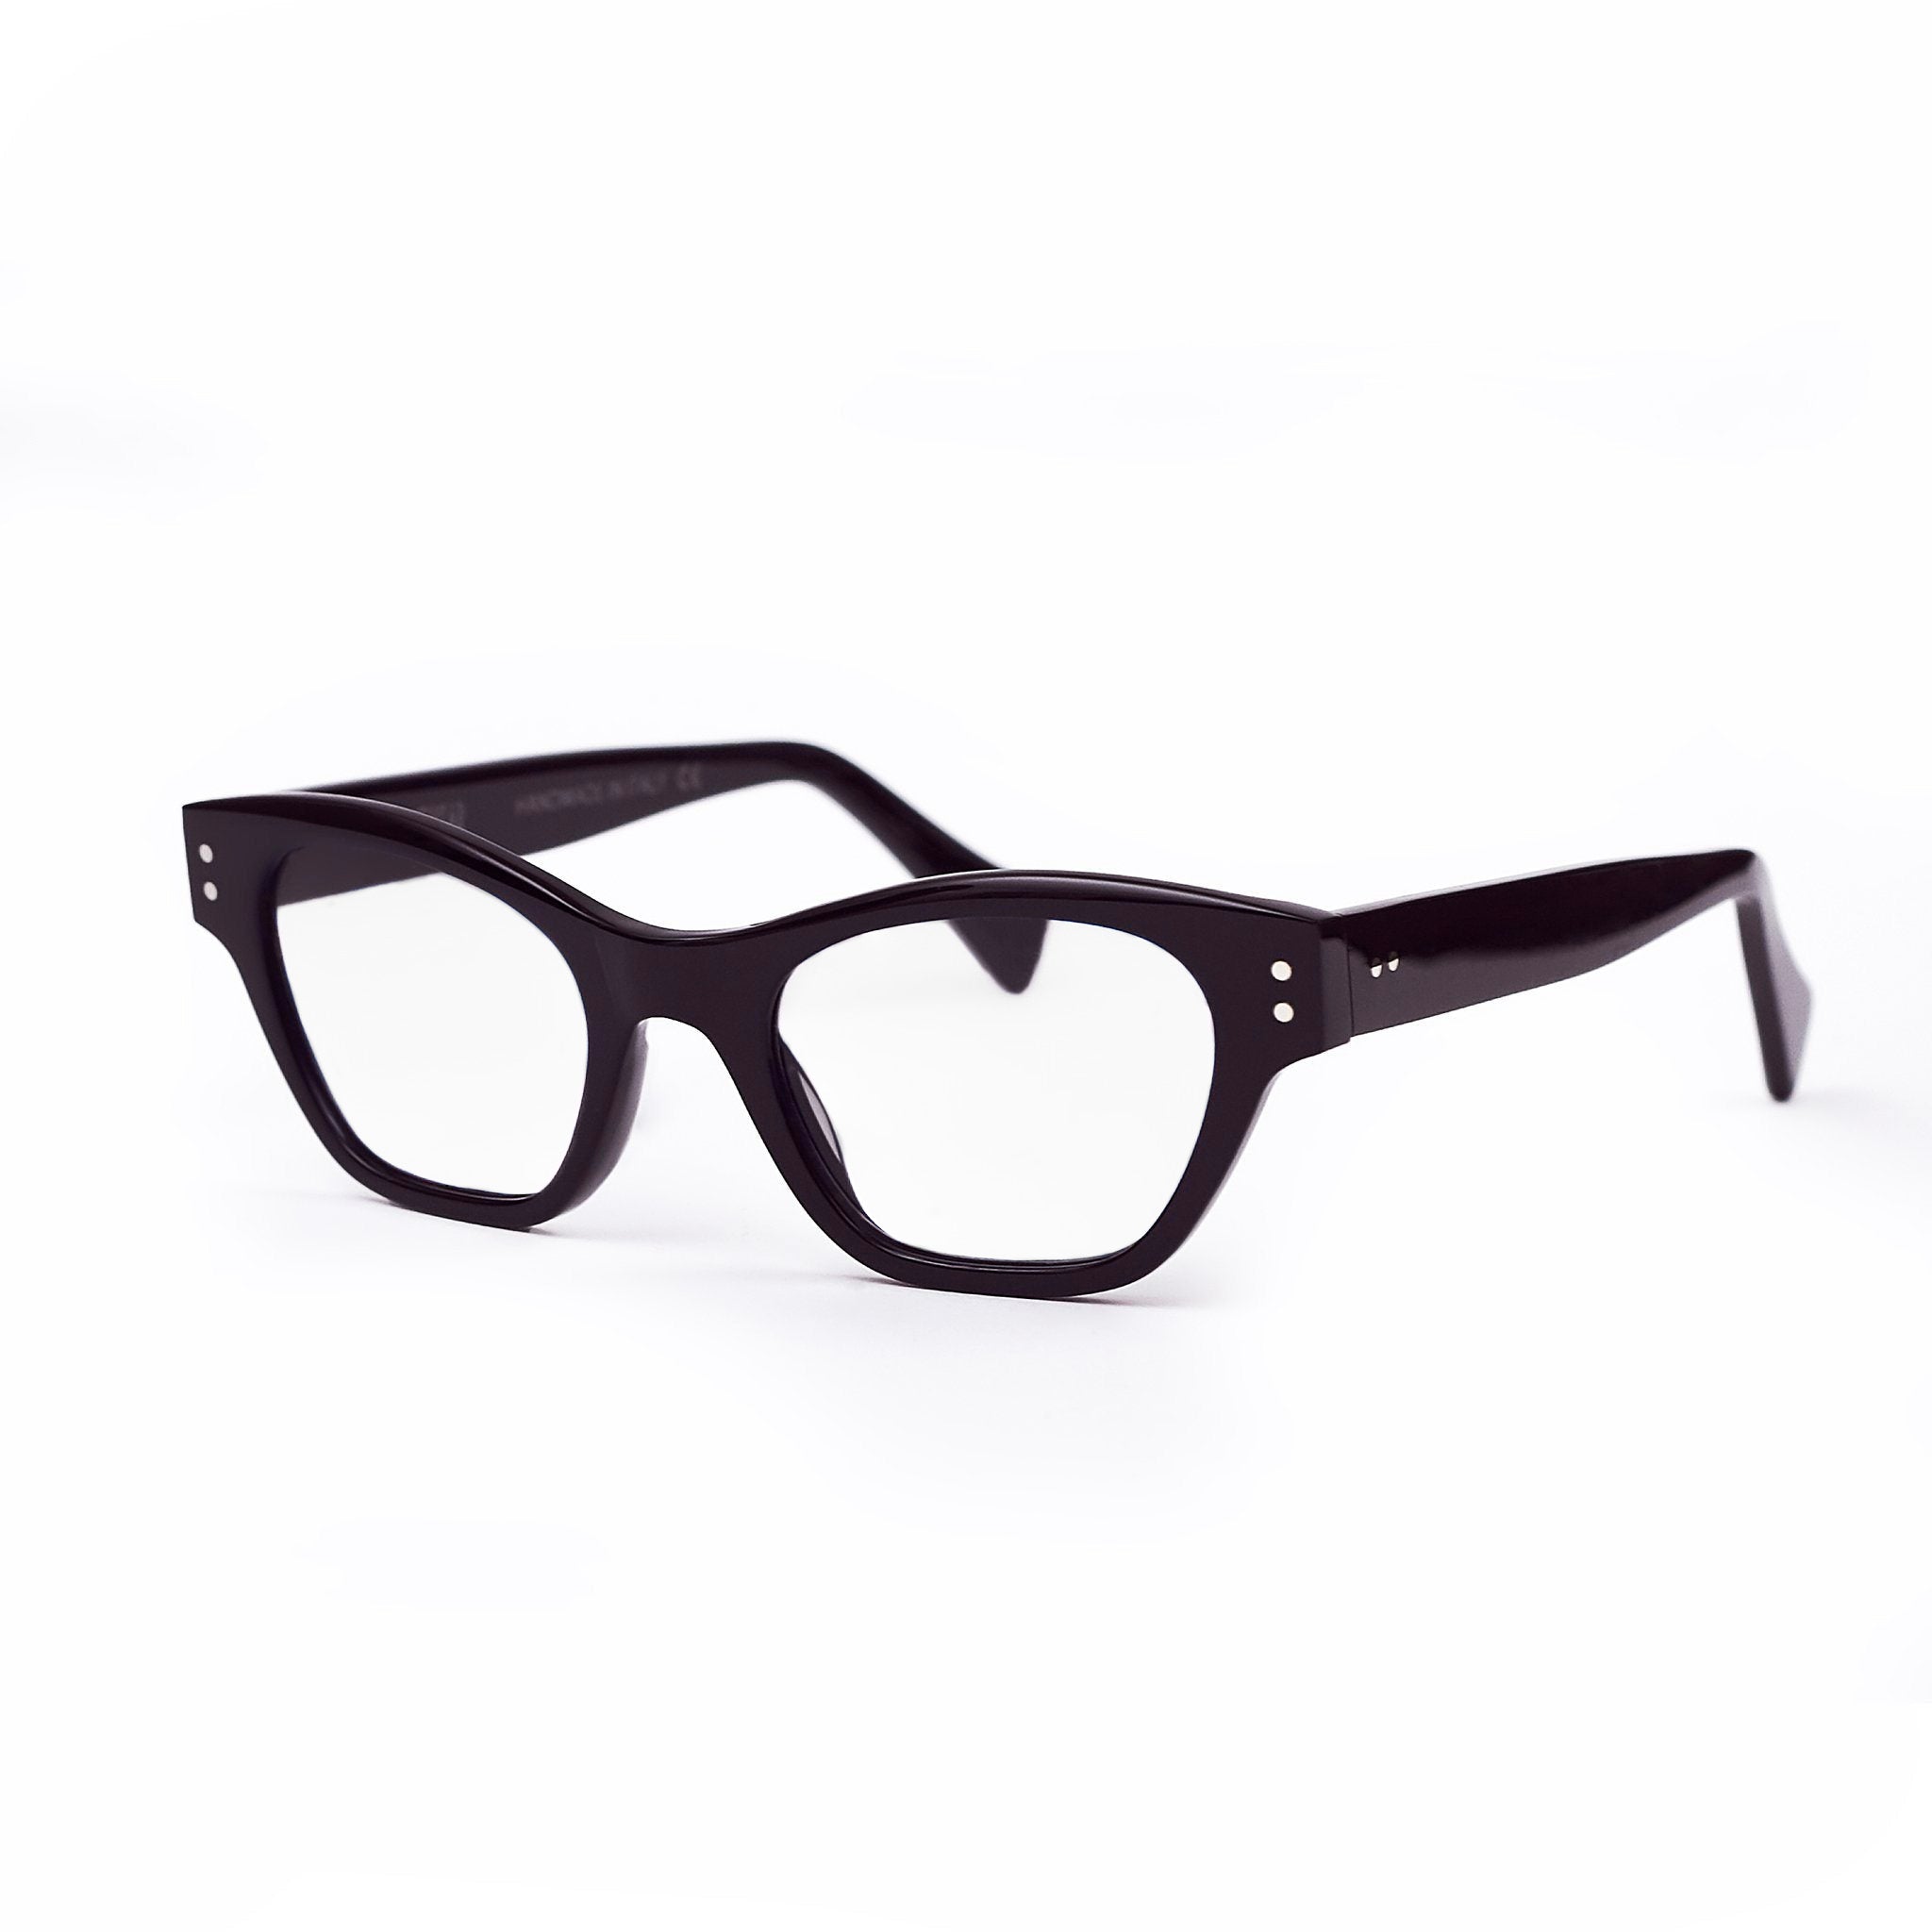 Ameos eyewear vega optical glasses in black frames, unisex.